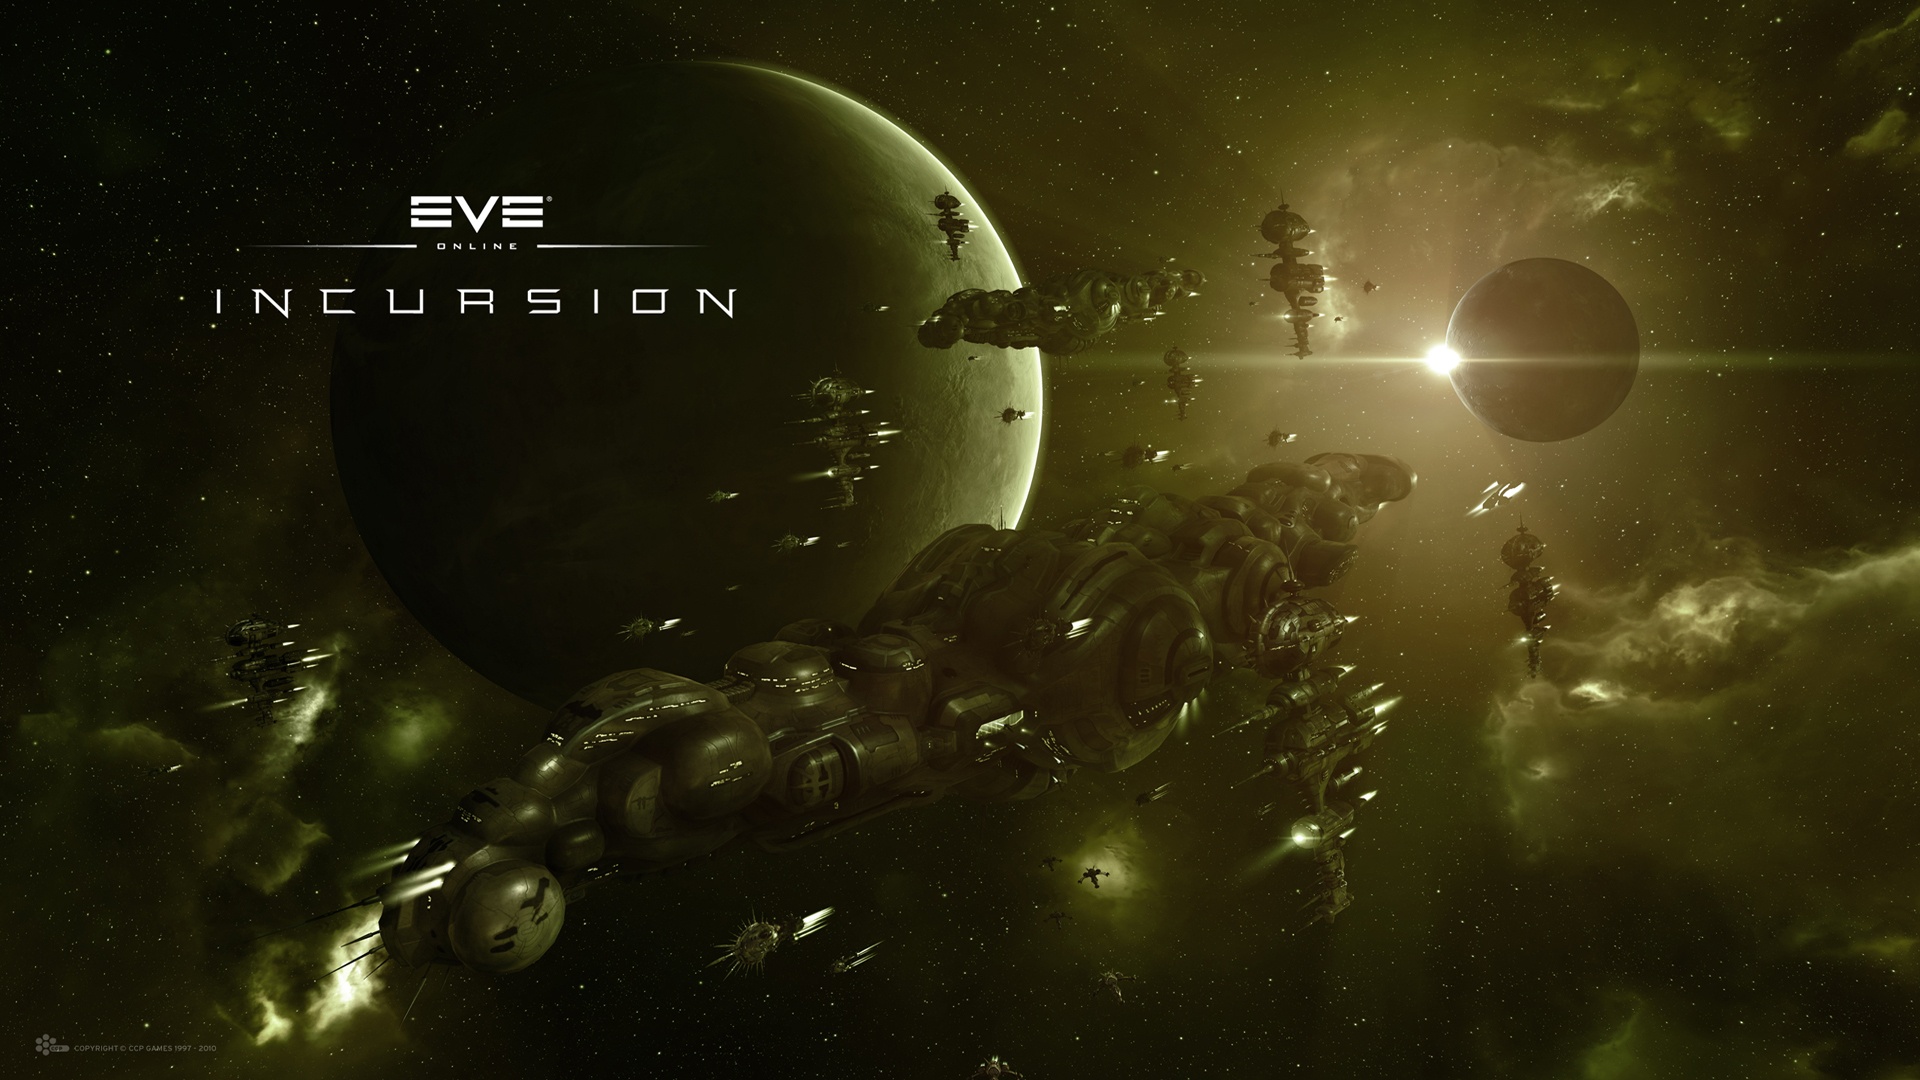 Eve Online Game Full HD Desktop Wallpaper 1080p